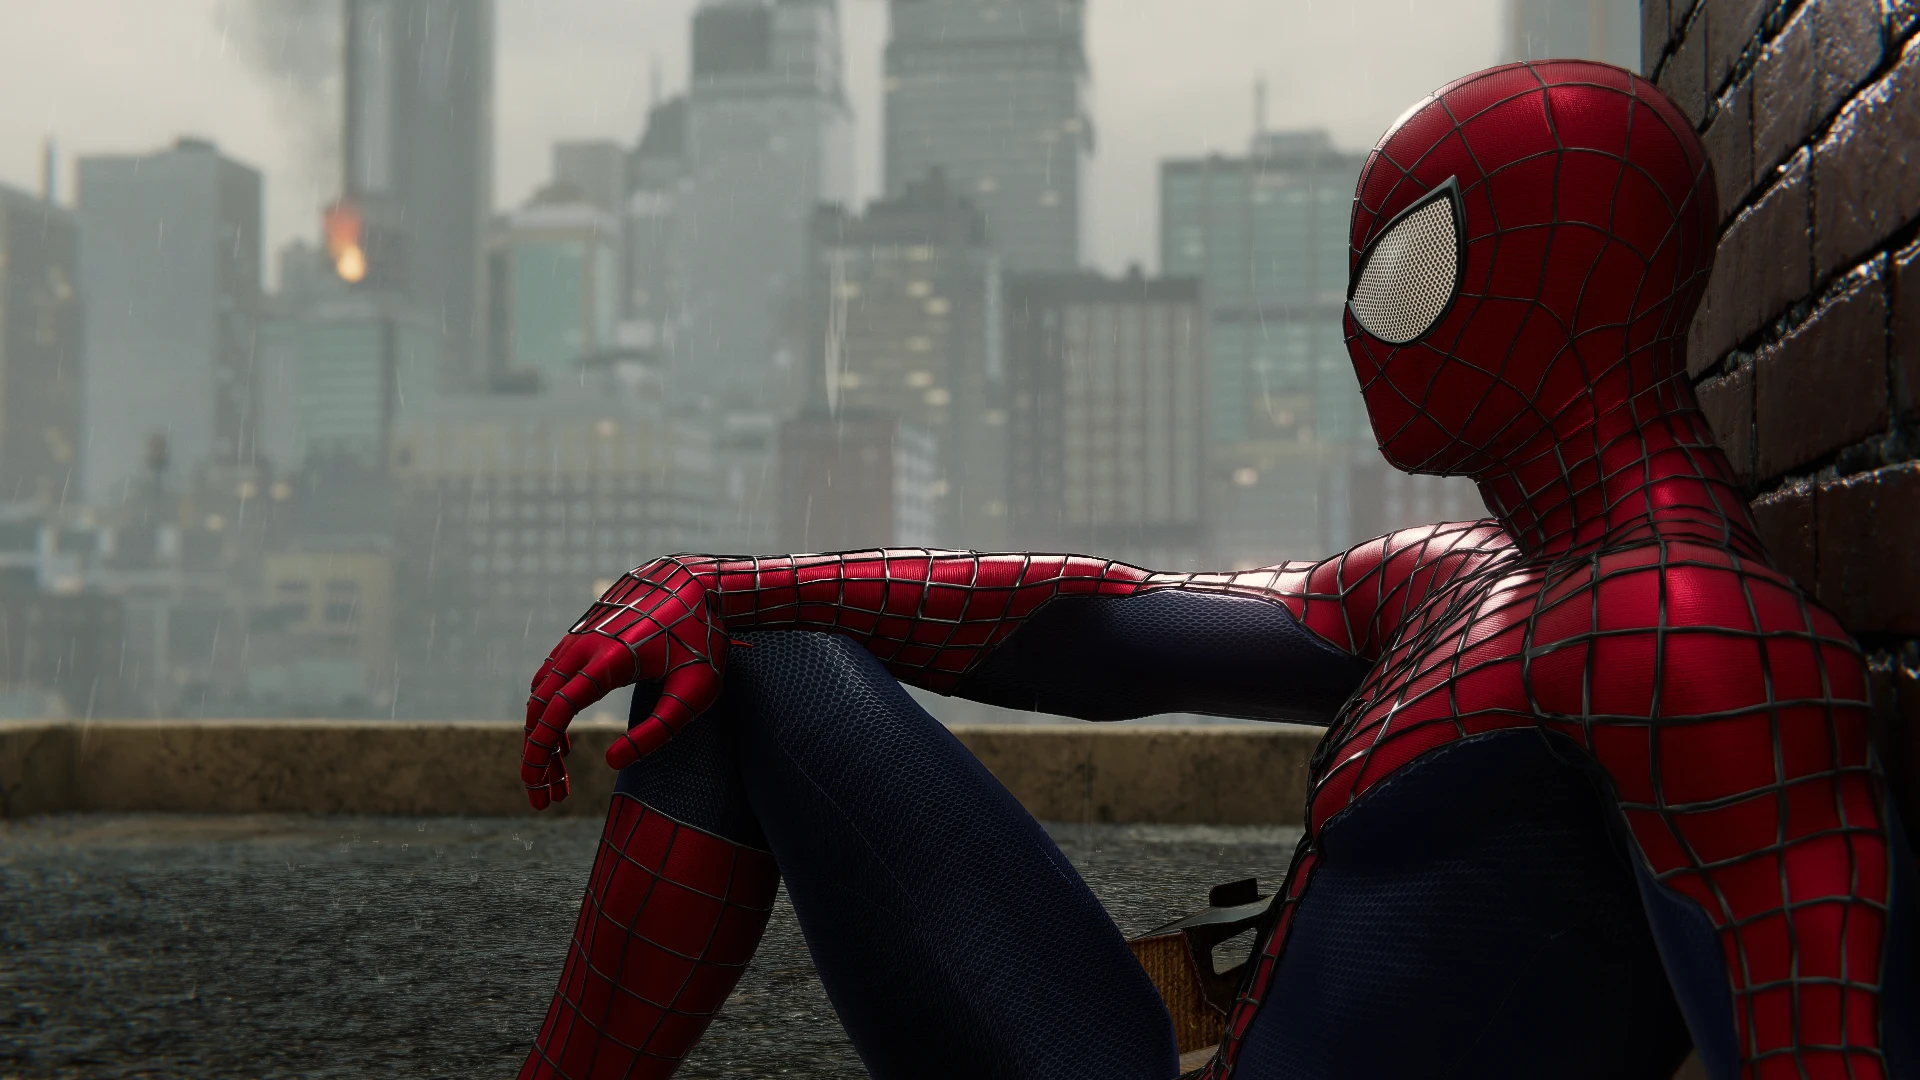 Паук 2 х. Tasm 2. Tasm 2 Suit. Tasm 2 Suit Marvel Spider man. Spider man tasm.